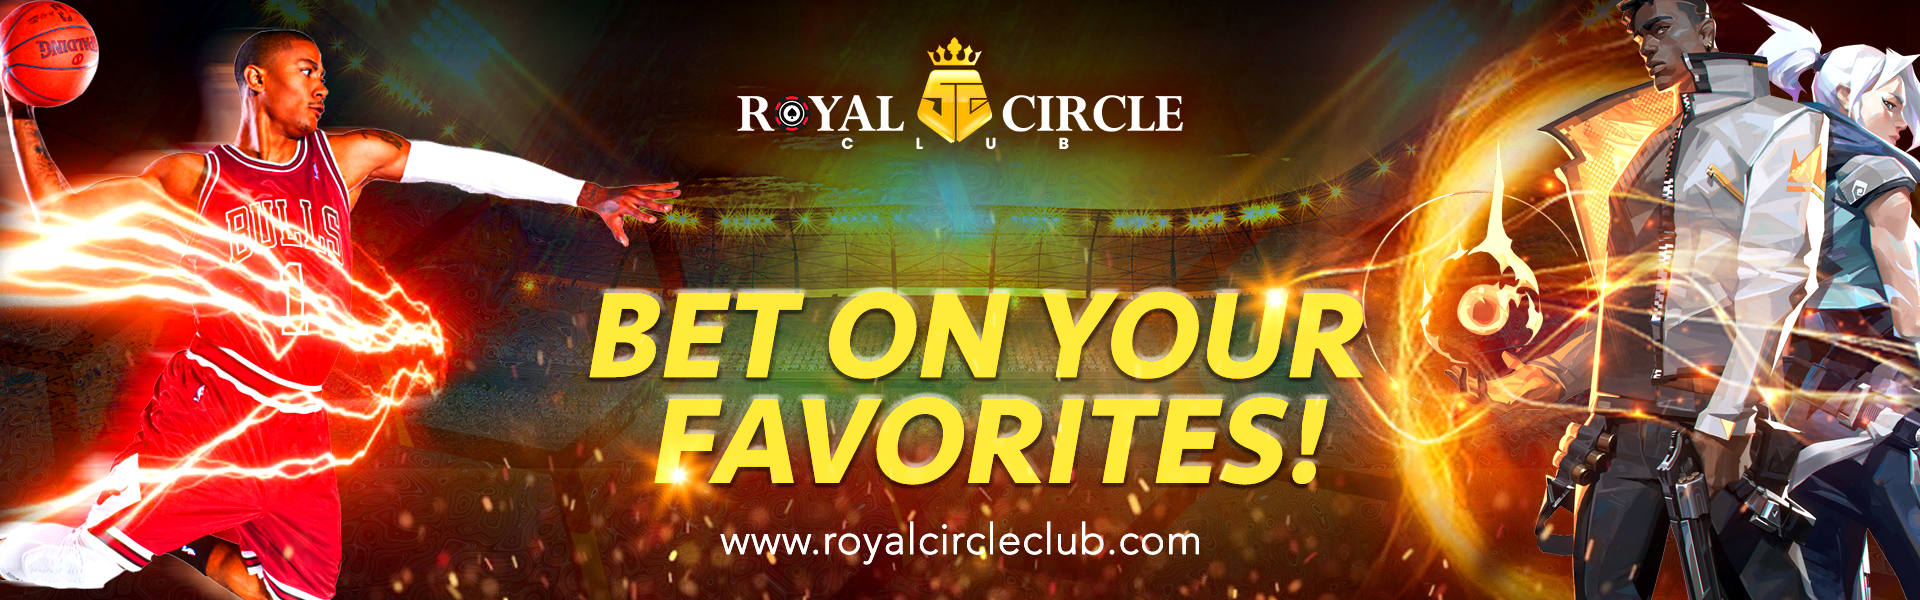 Royal Circle Club - Welcome 5 - royalcc1.com